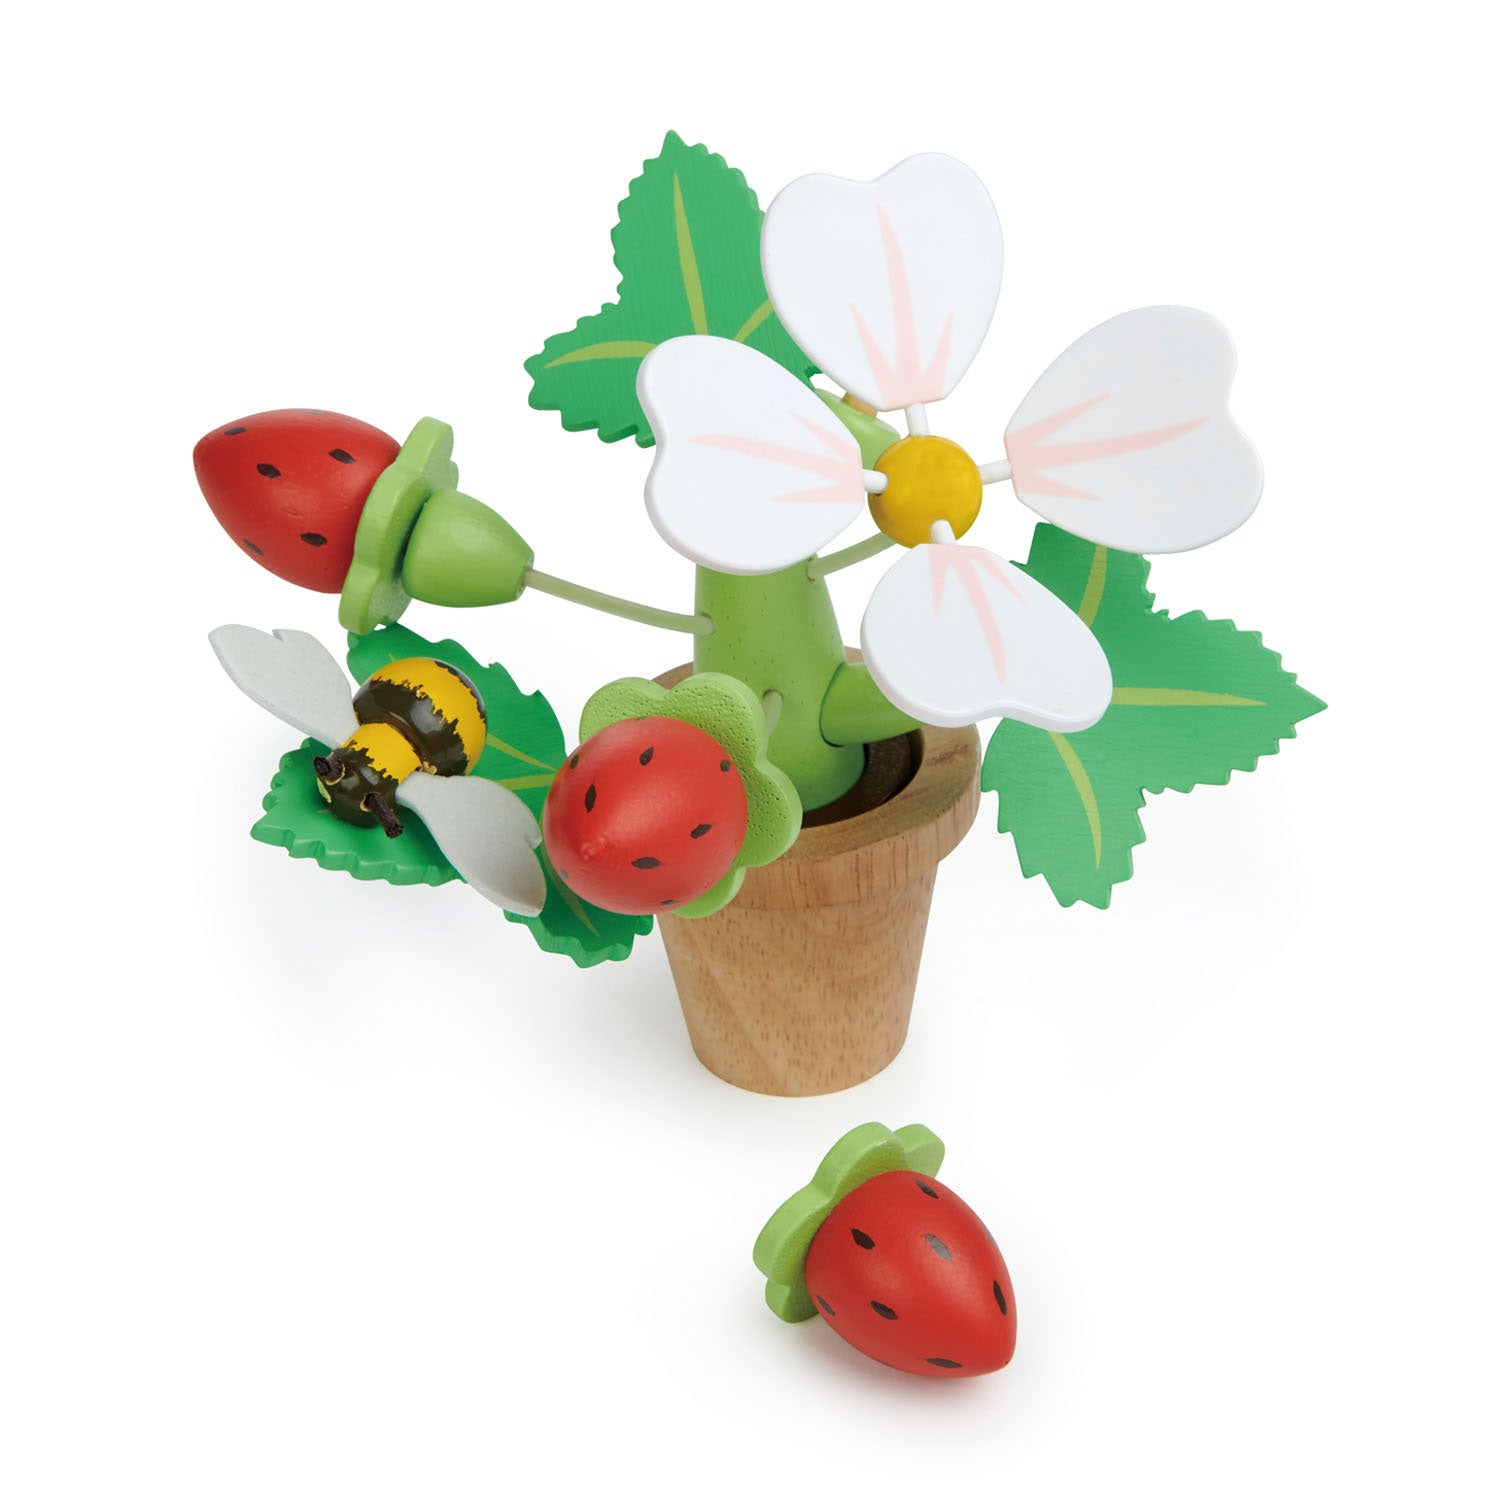 Tender Leaf Toys Strawberry Flower Pot